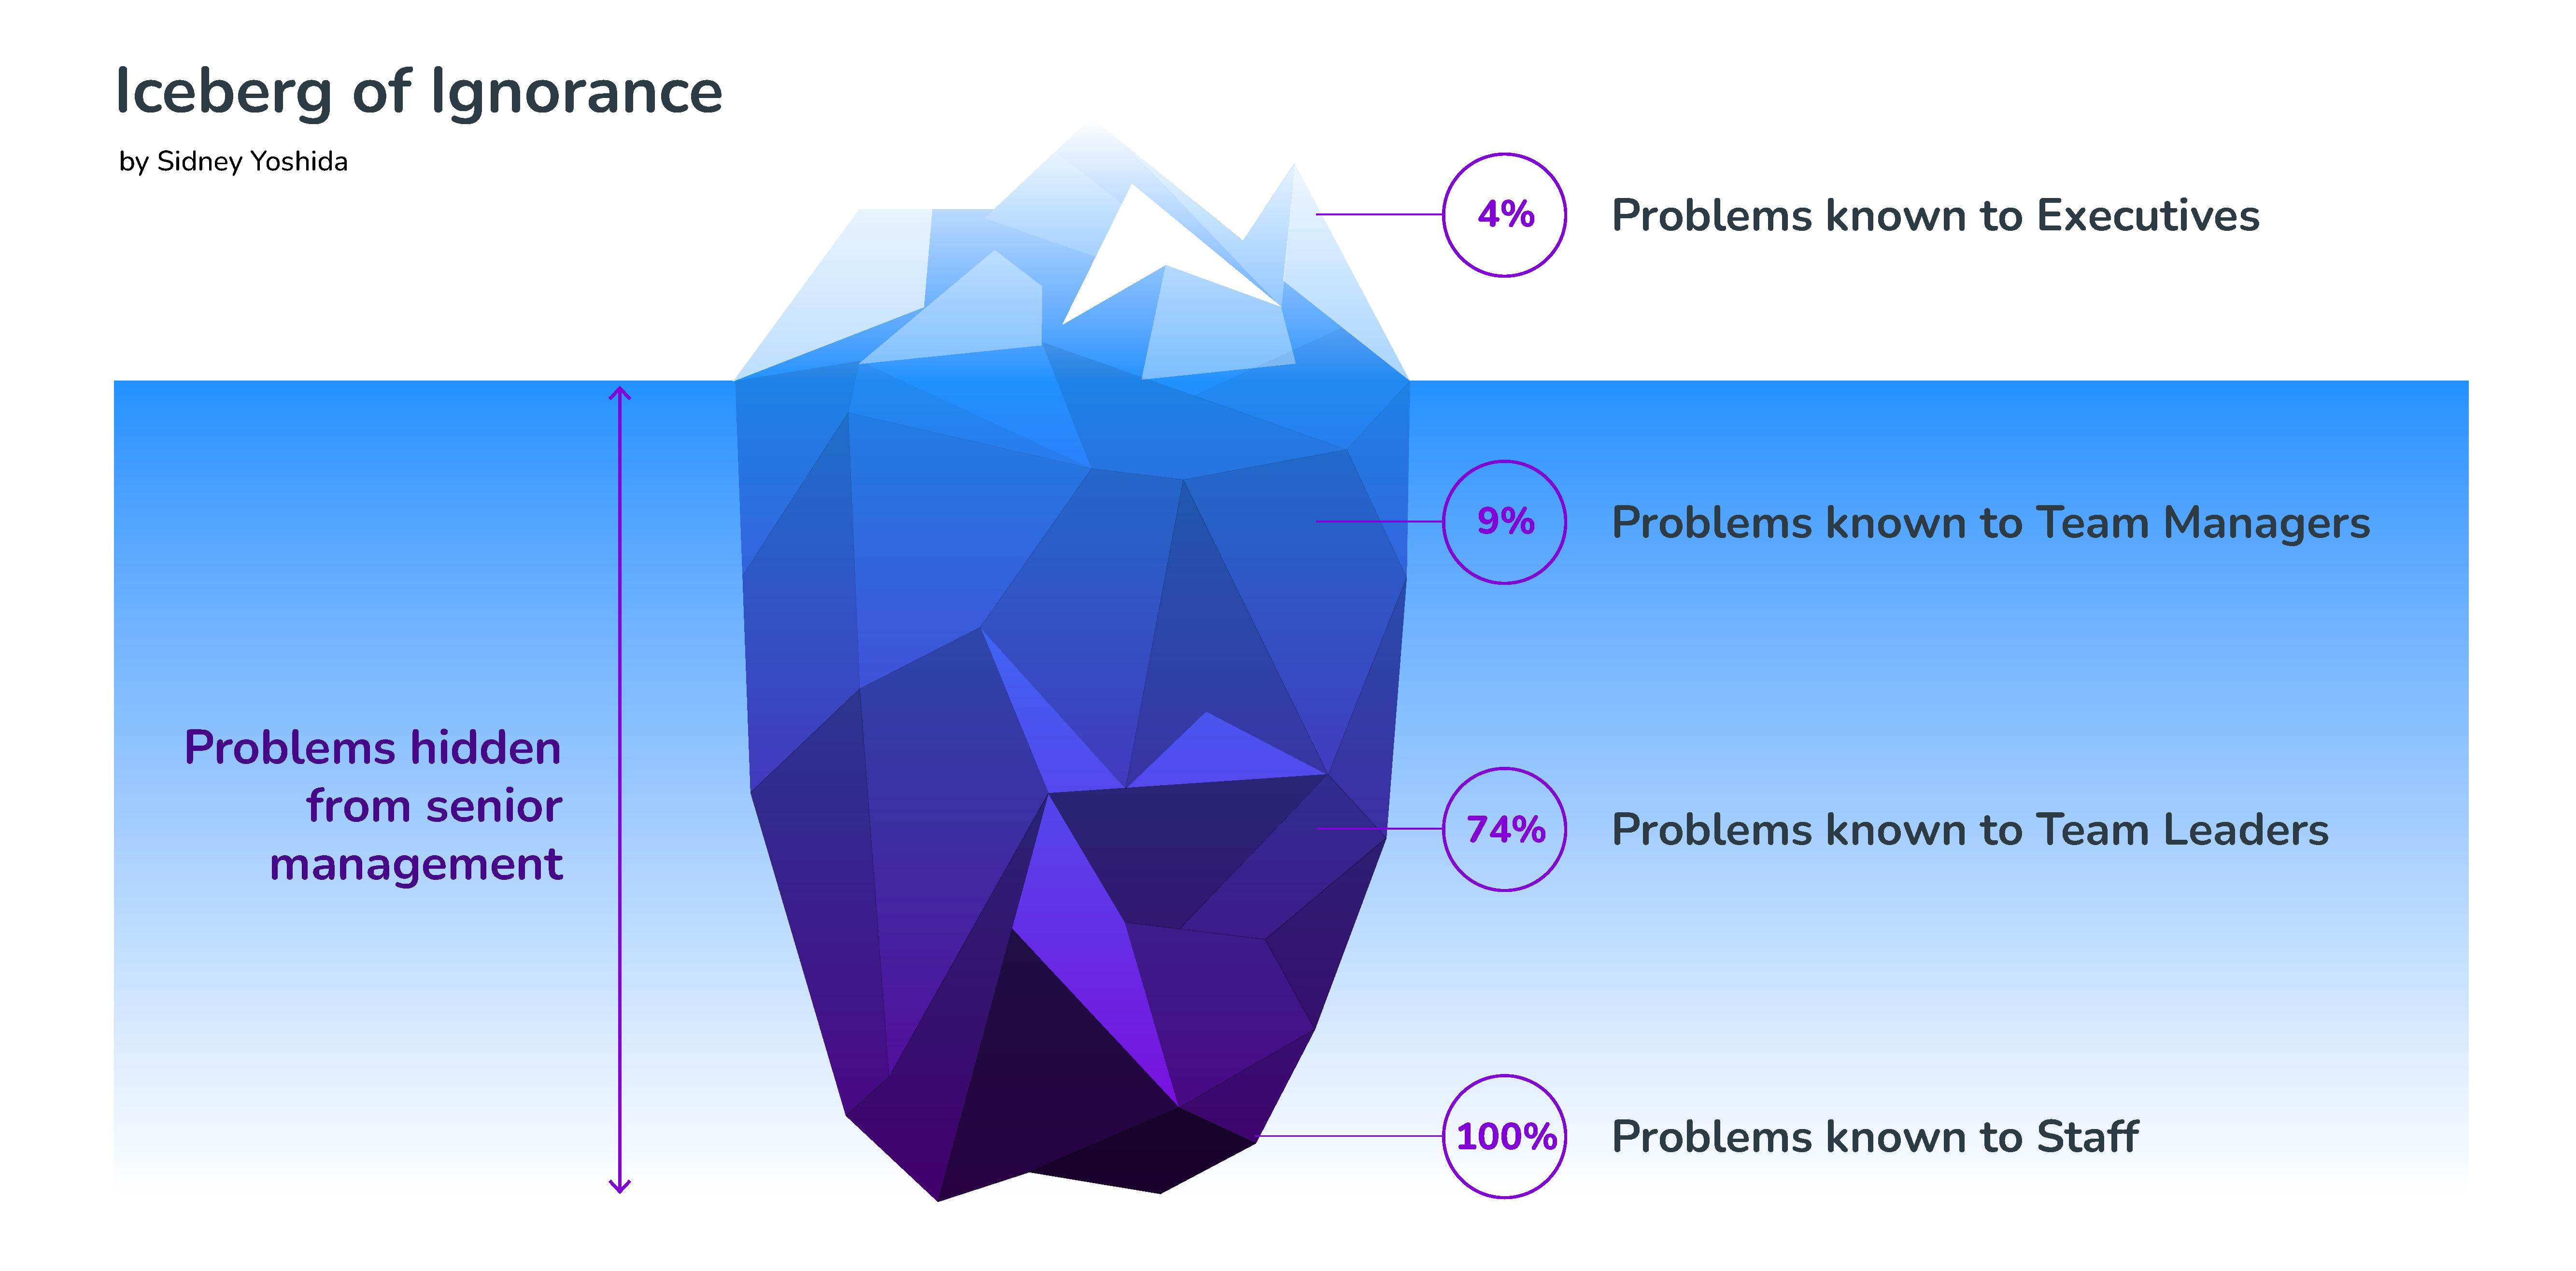 The Iceberg of Ignorance